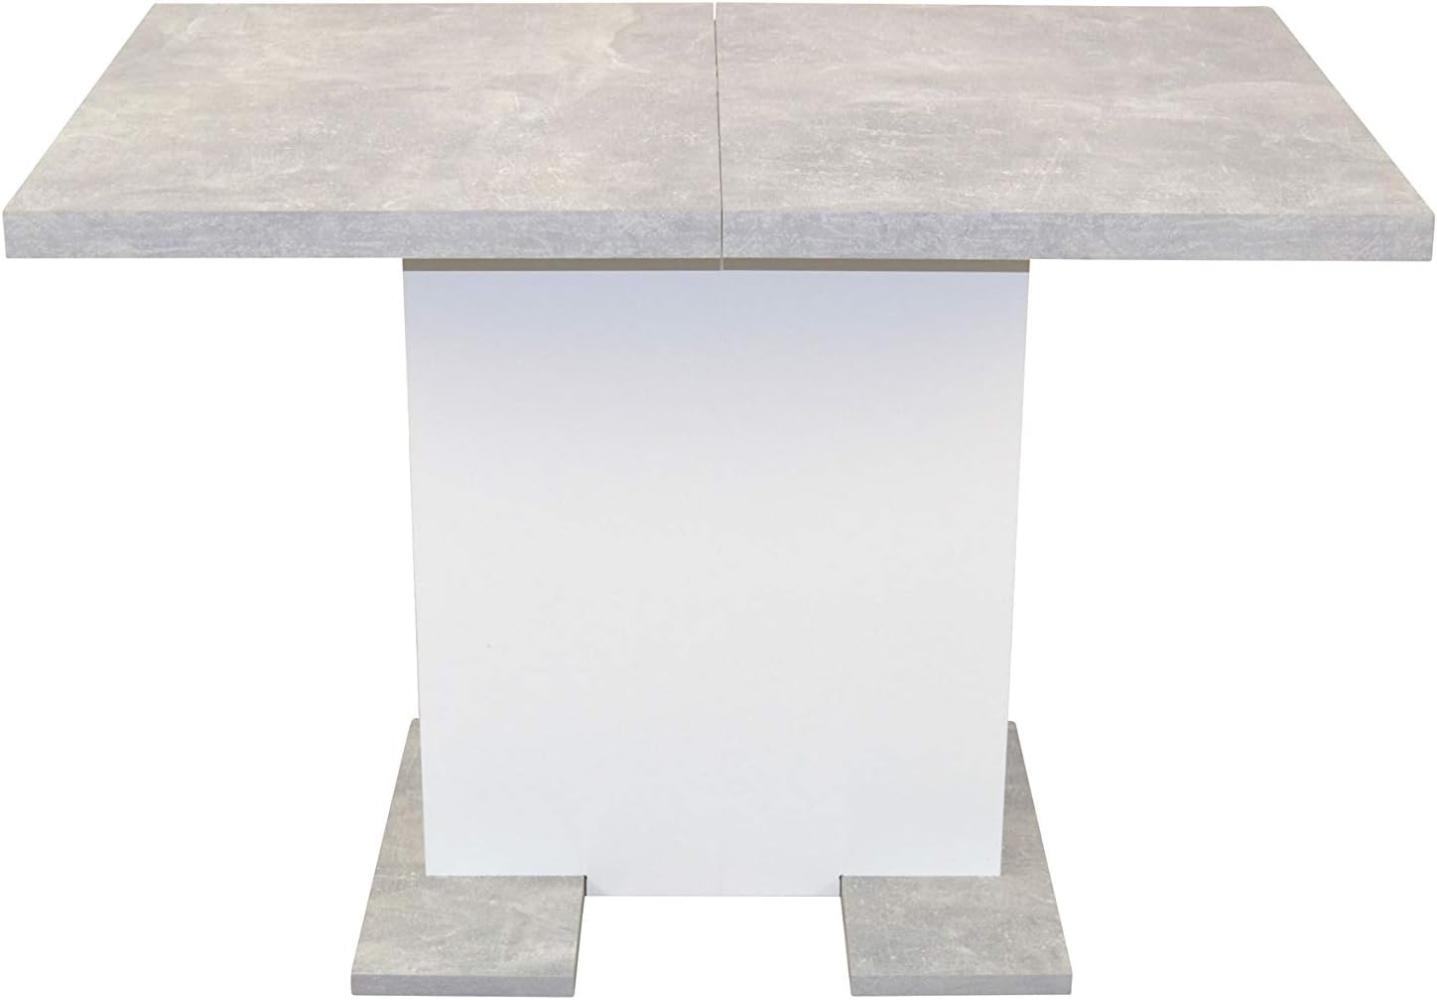 Säulentisch "Sandra" ausziehbar, Betonoptik, grau/weiß Bild 1